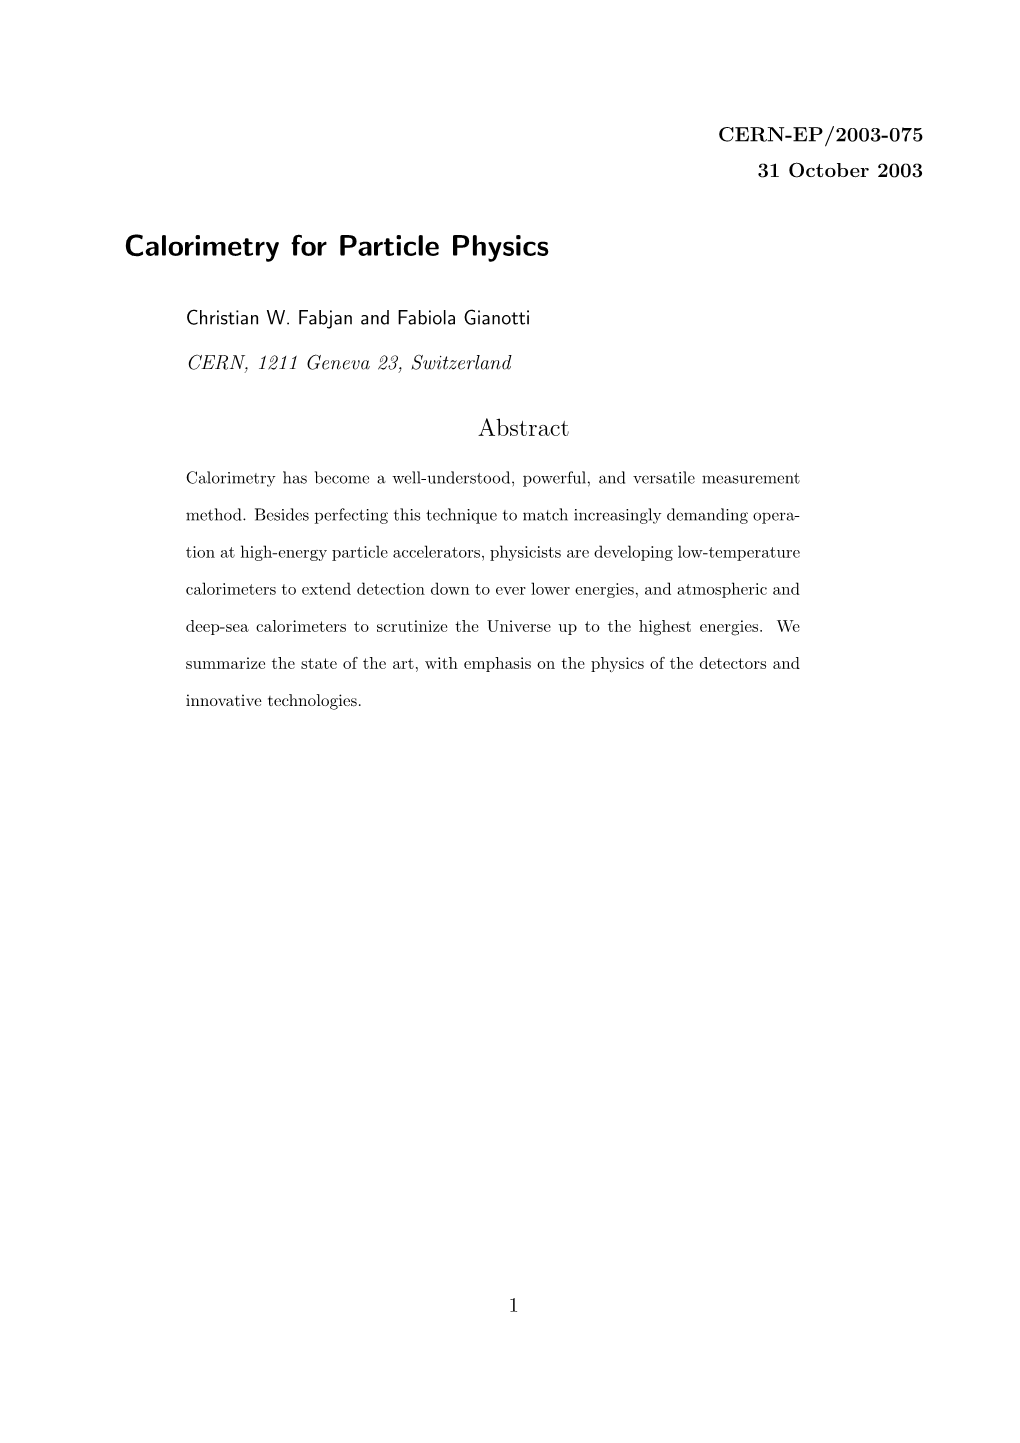 Calorimetry for Particle Physics